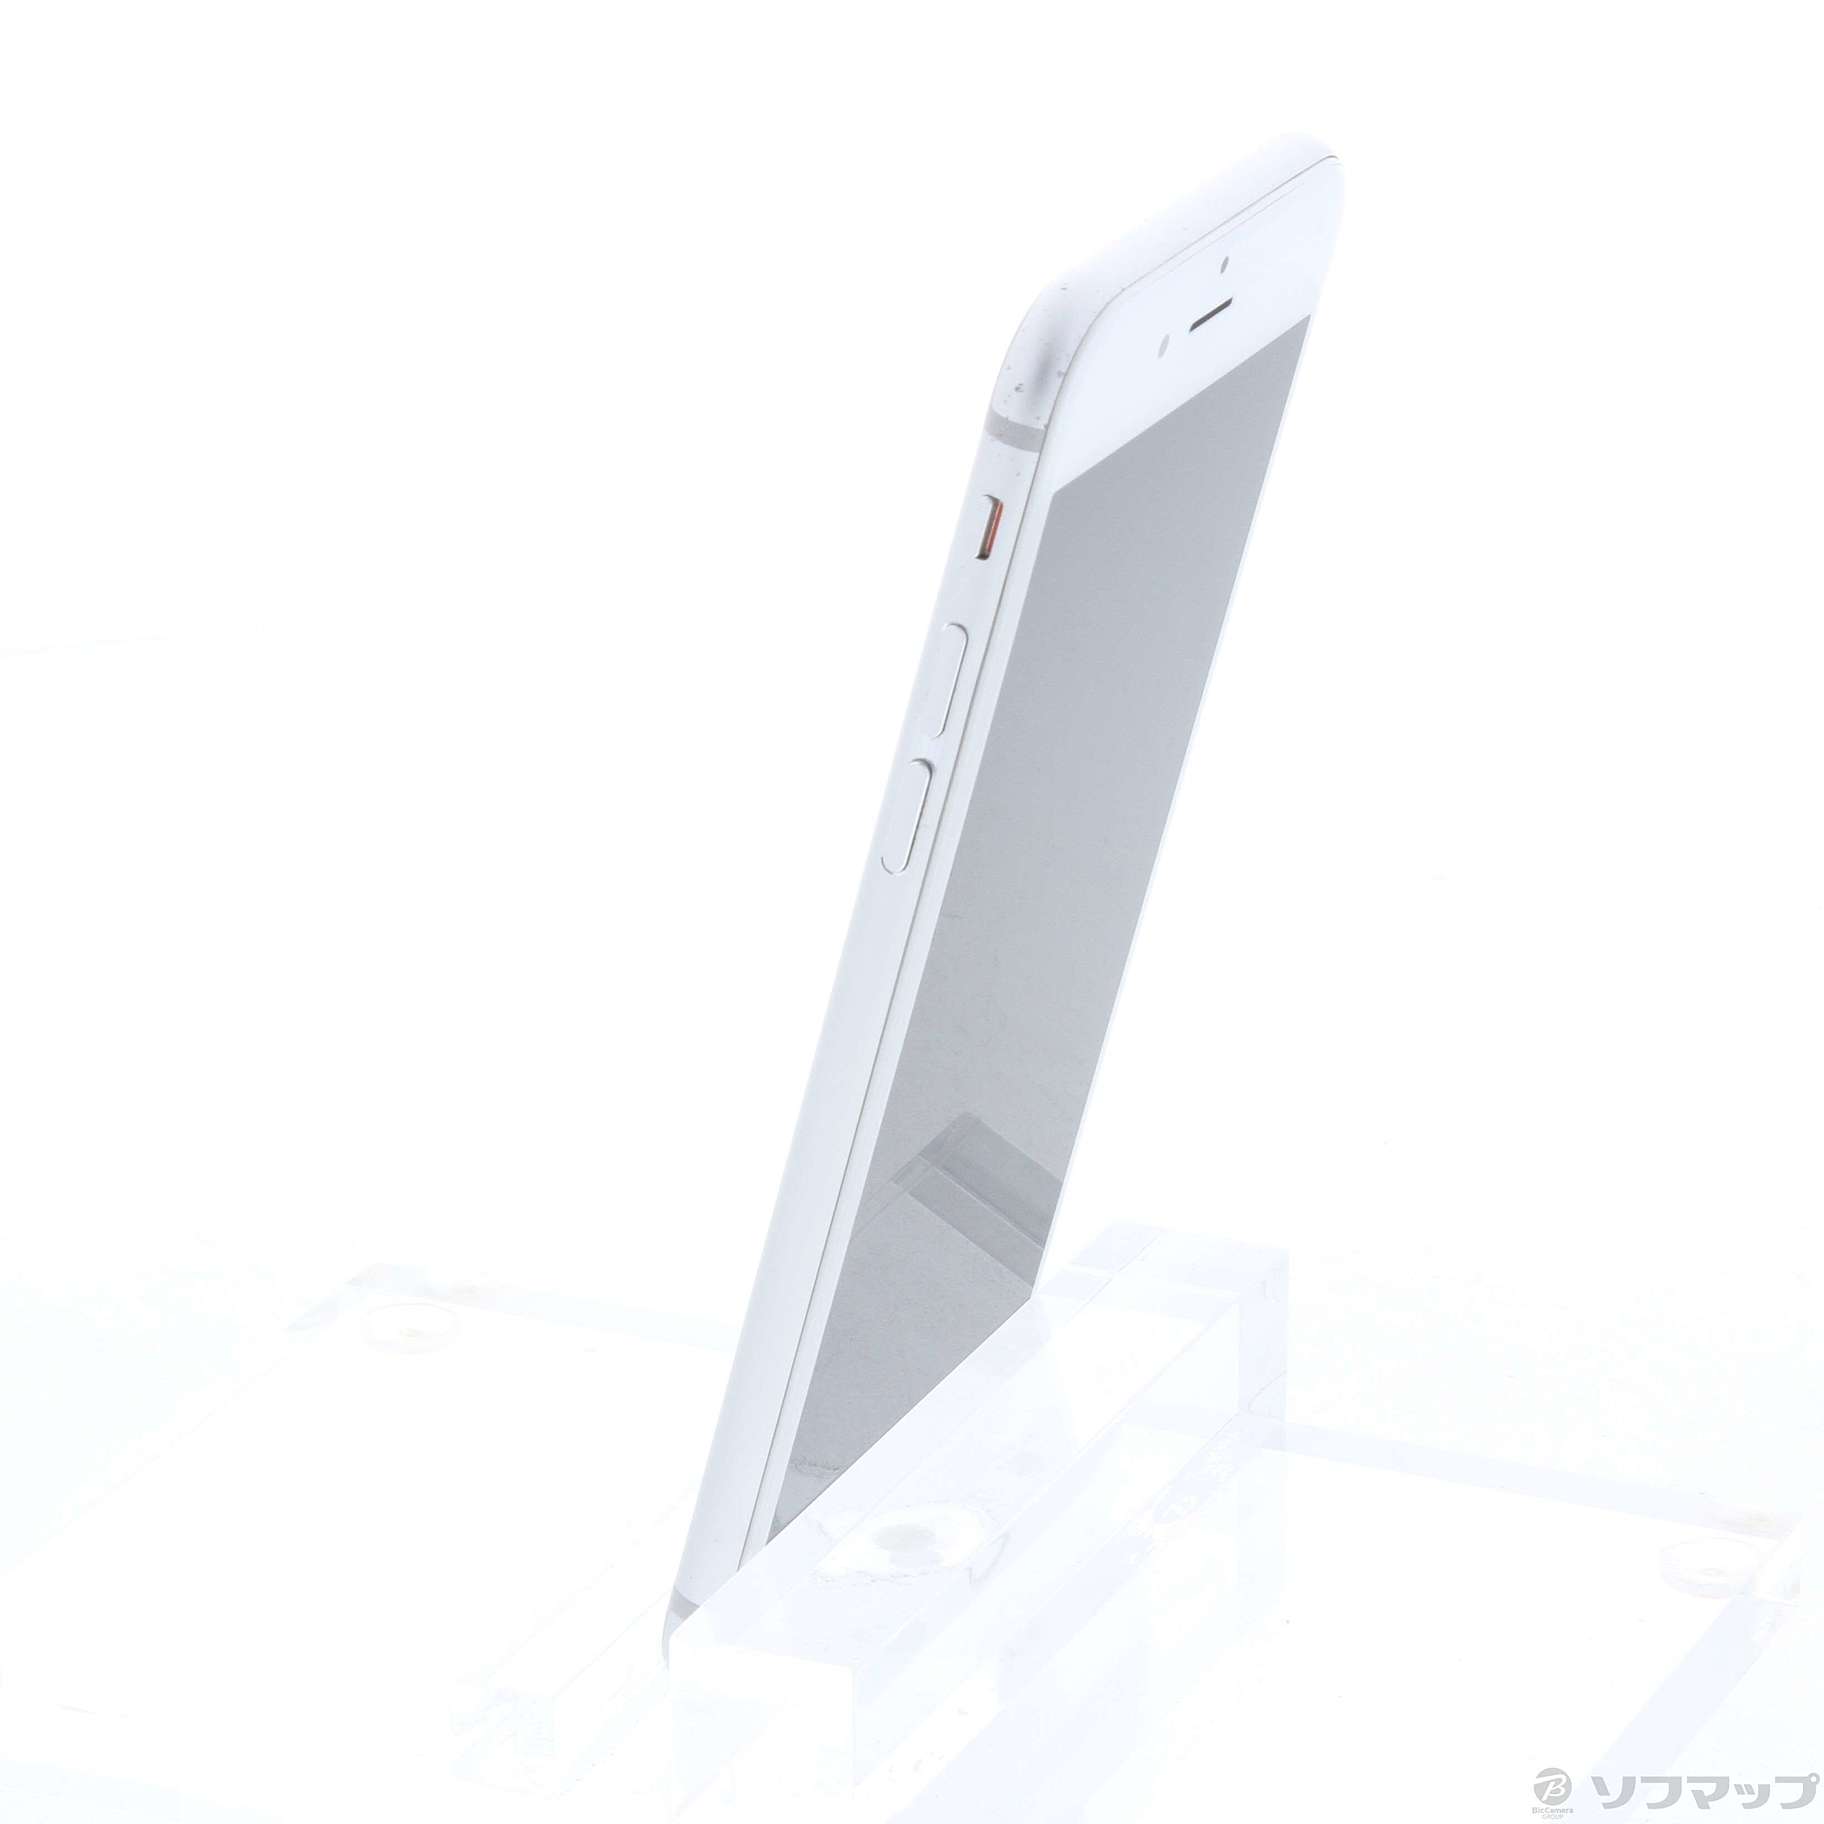 Apple SoftBank iPhone6 64GB MG4H2J/A